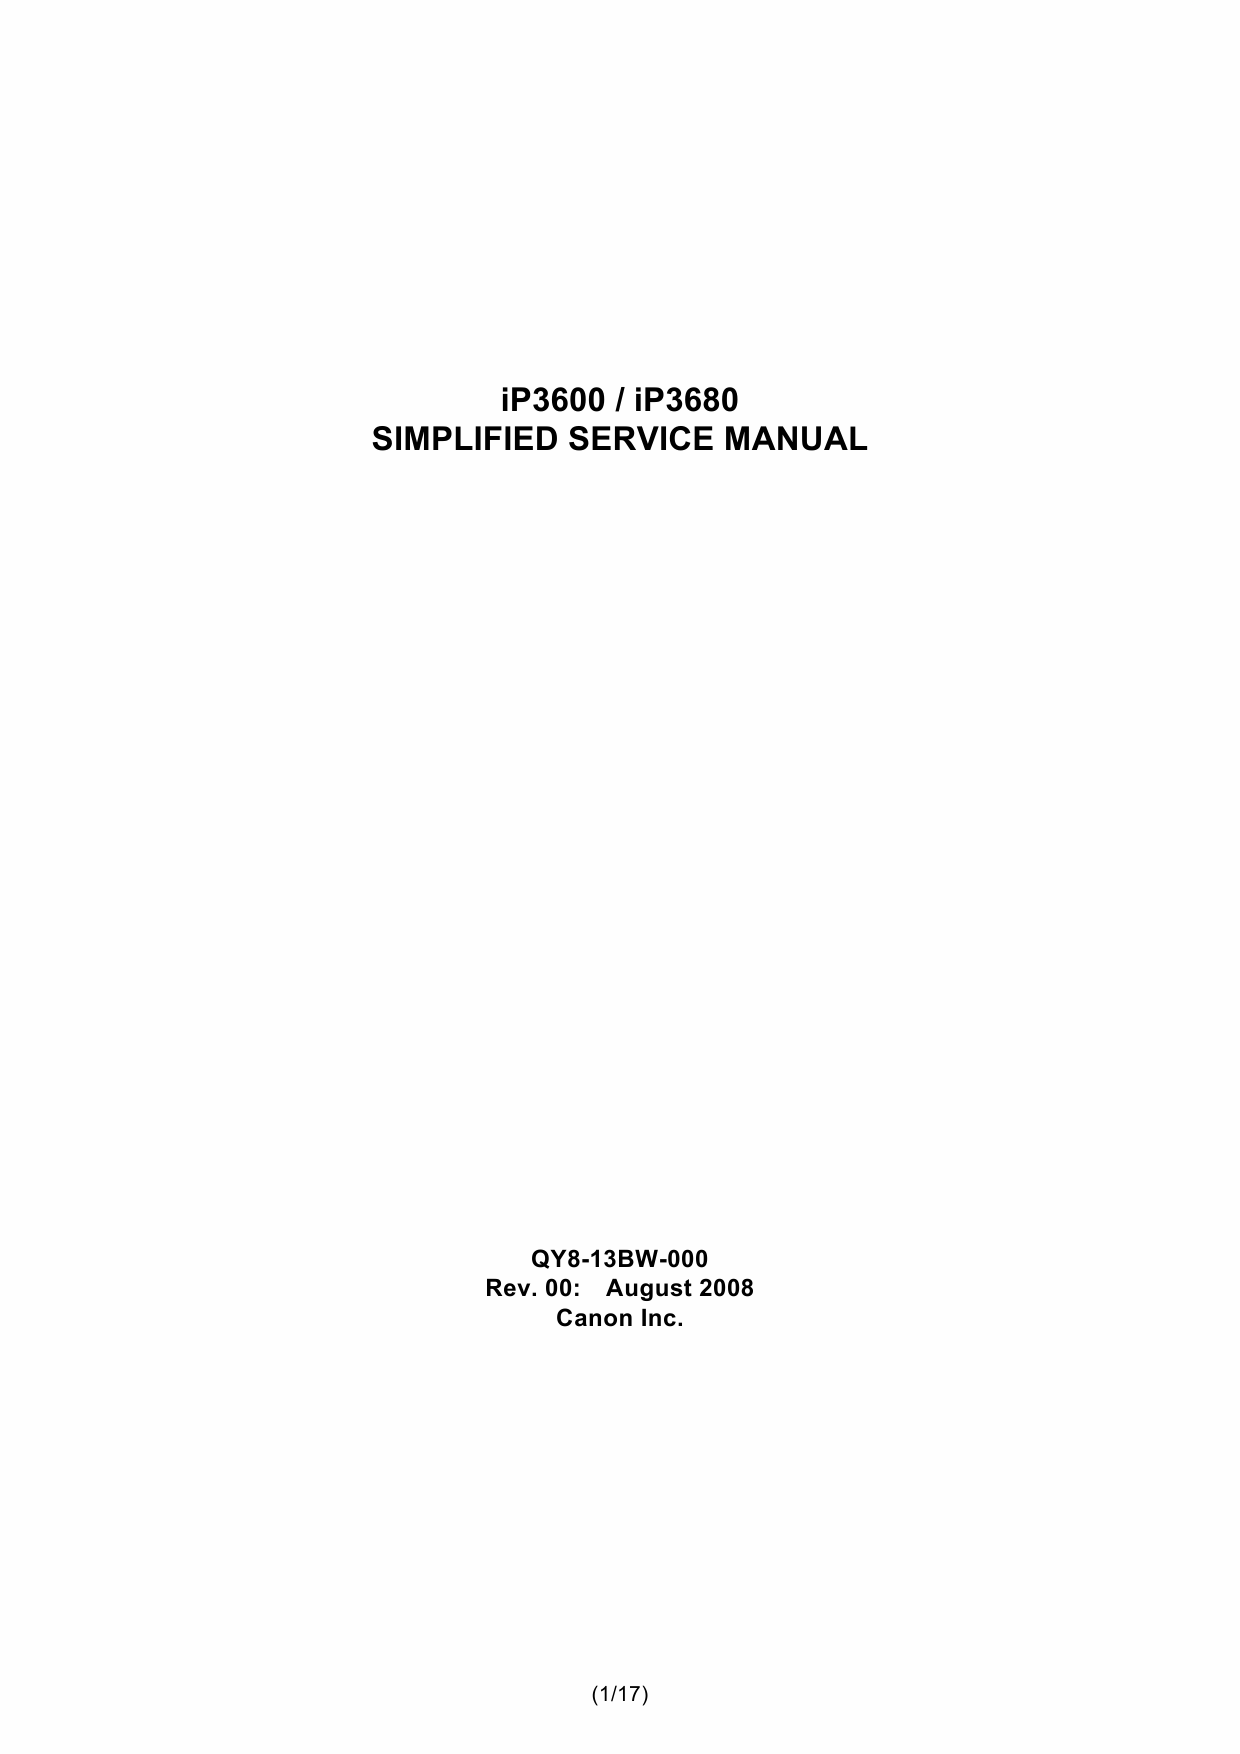 Canon PIXMA iP3600 iP3680 Simplified Service Manual-1